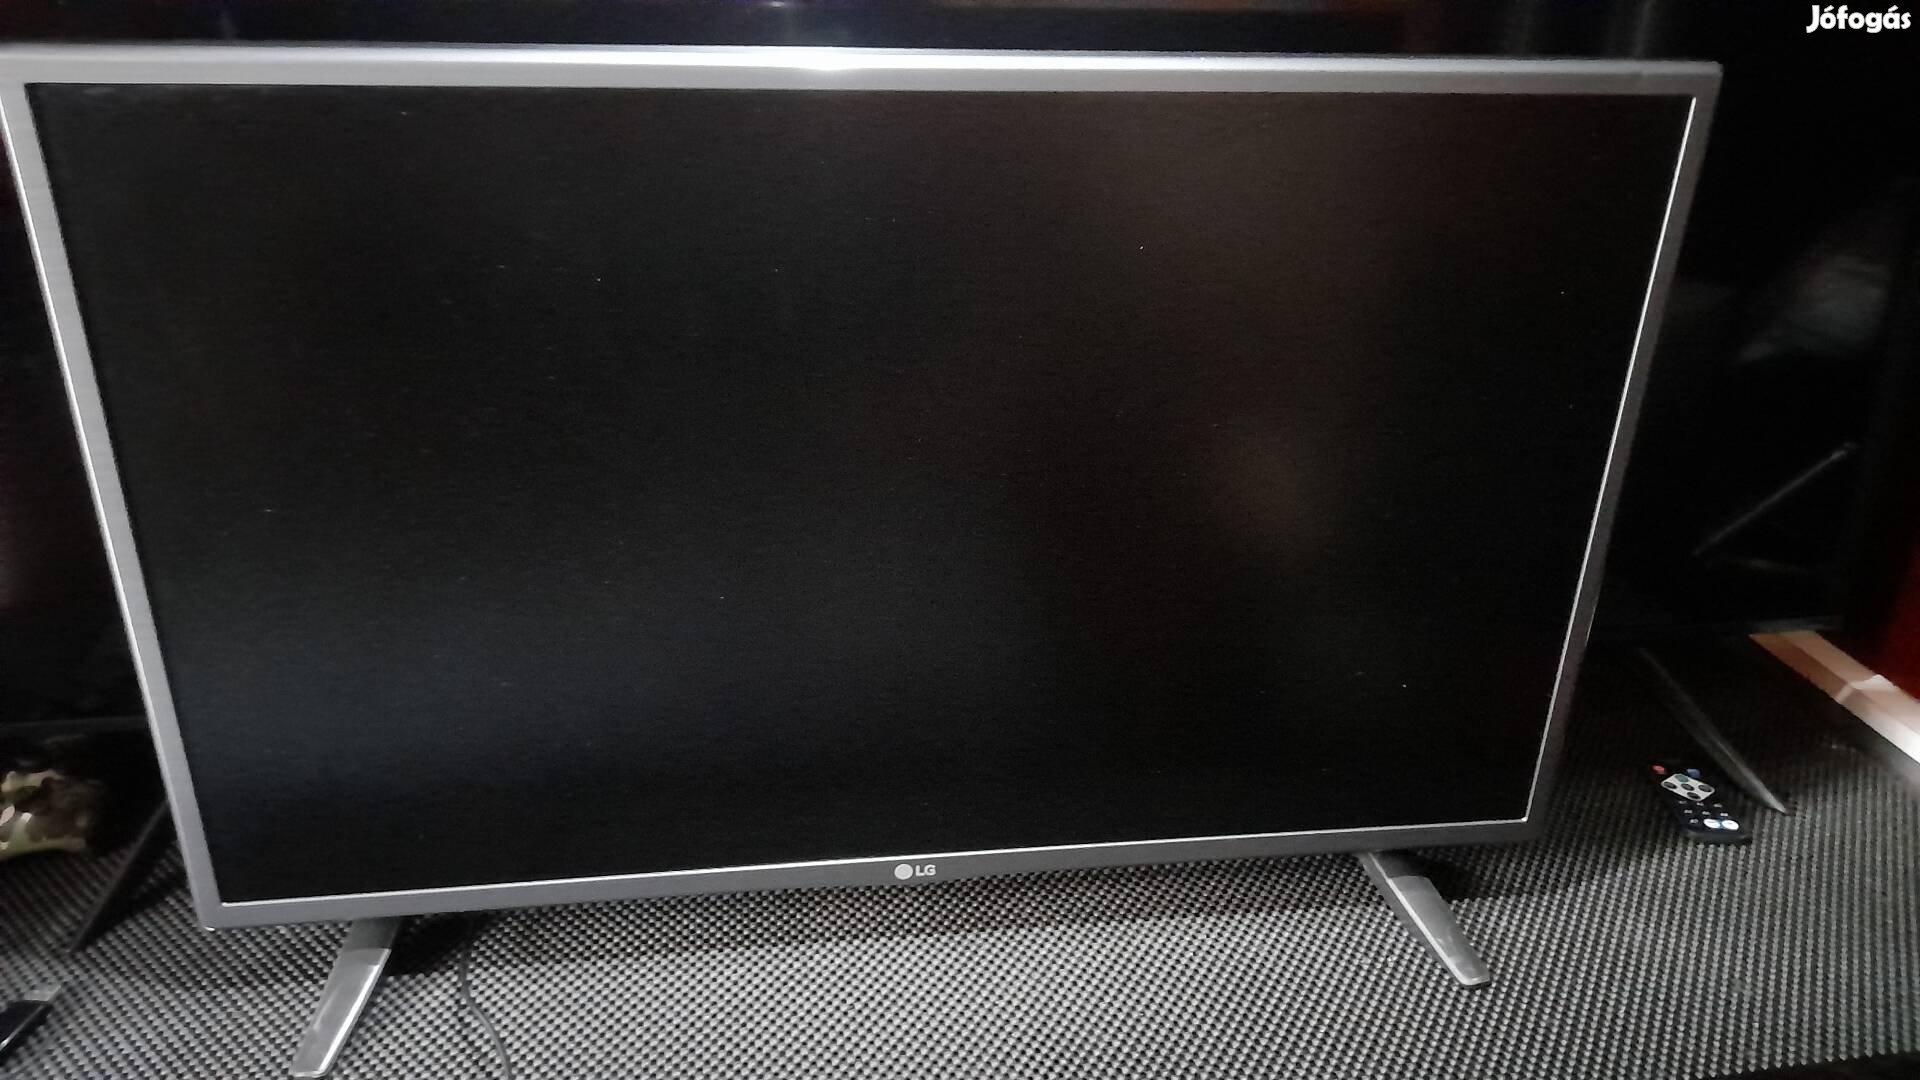 LG 82cm hd ready smart led tv eladó!